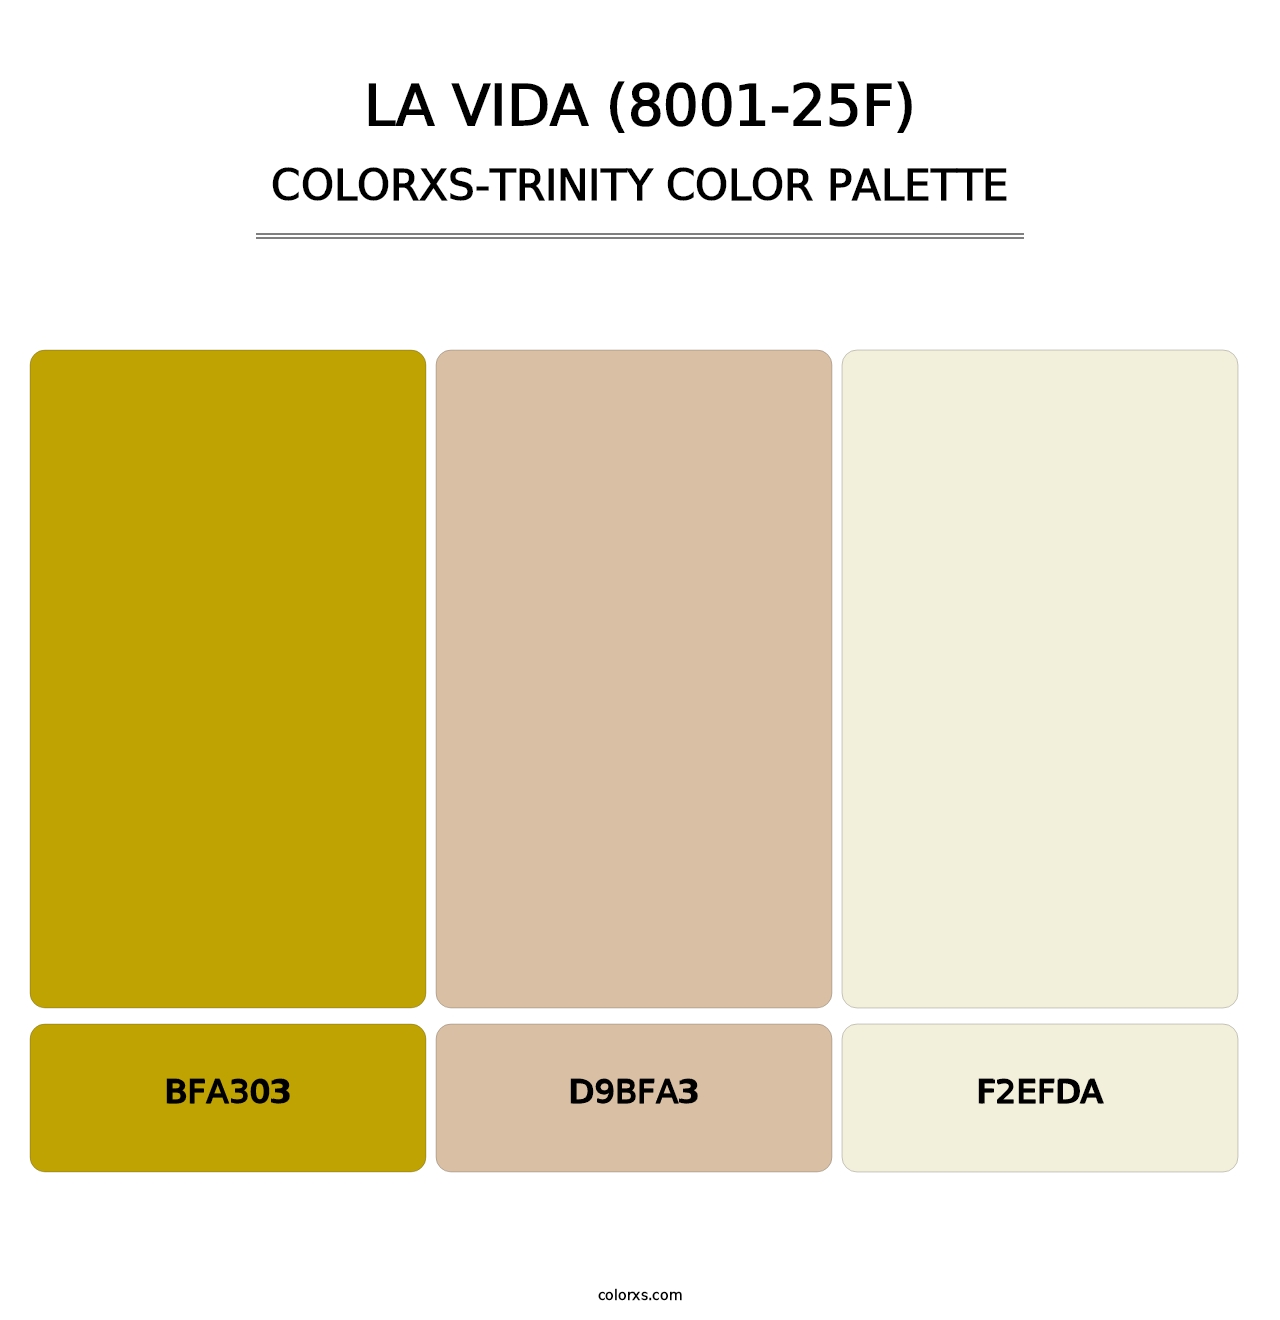 La Vida (8001-25F) - Colorxs Trinity Palette